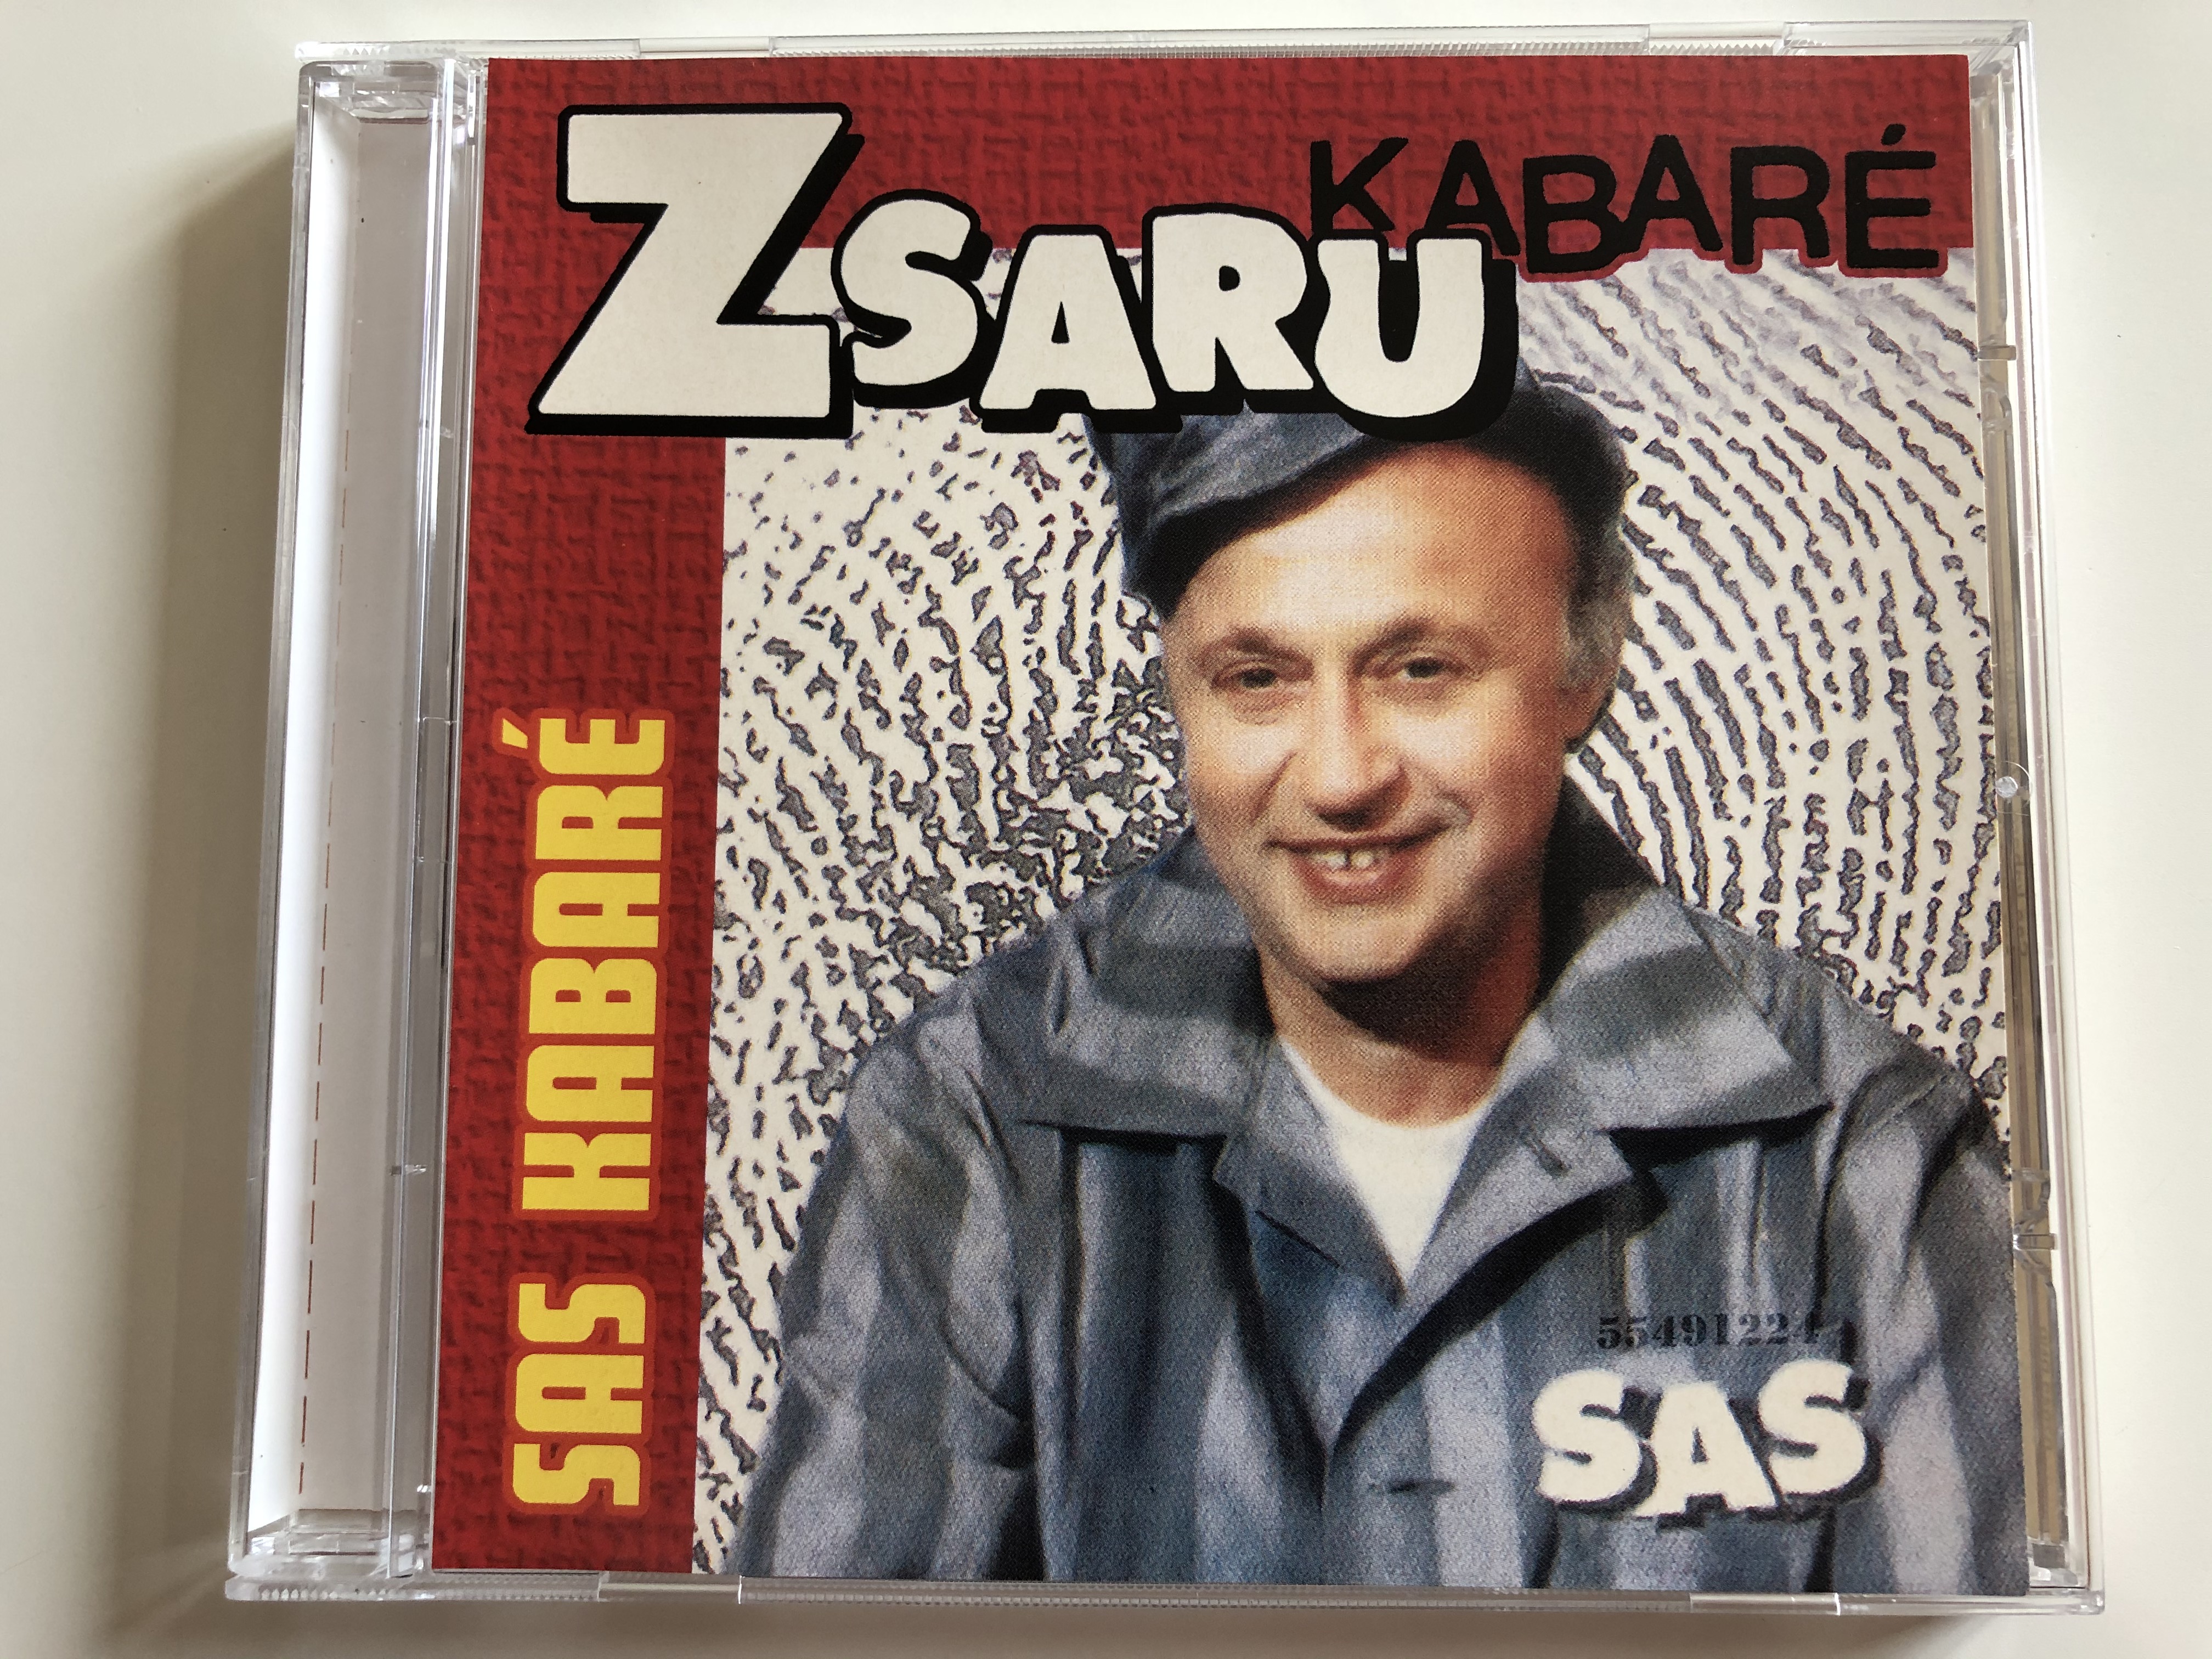 sas-j-zsef-zsaru-kabar-rnr-media-kft.-audio-cd-1997-07042-rnr-1-.jpg